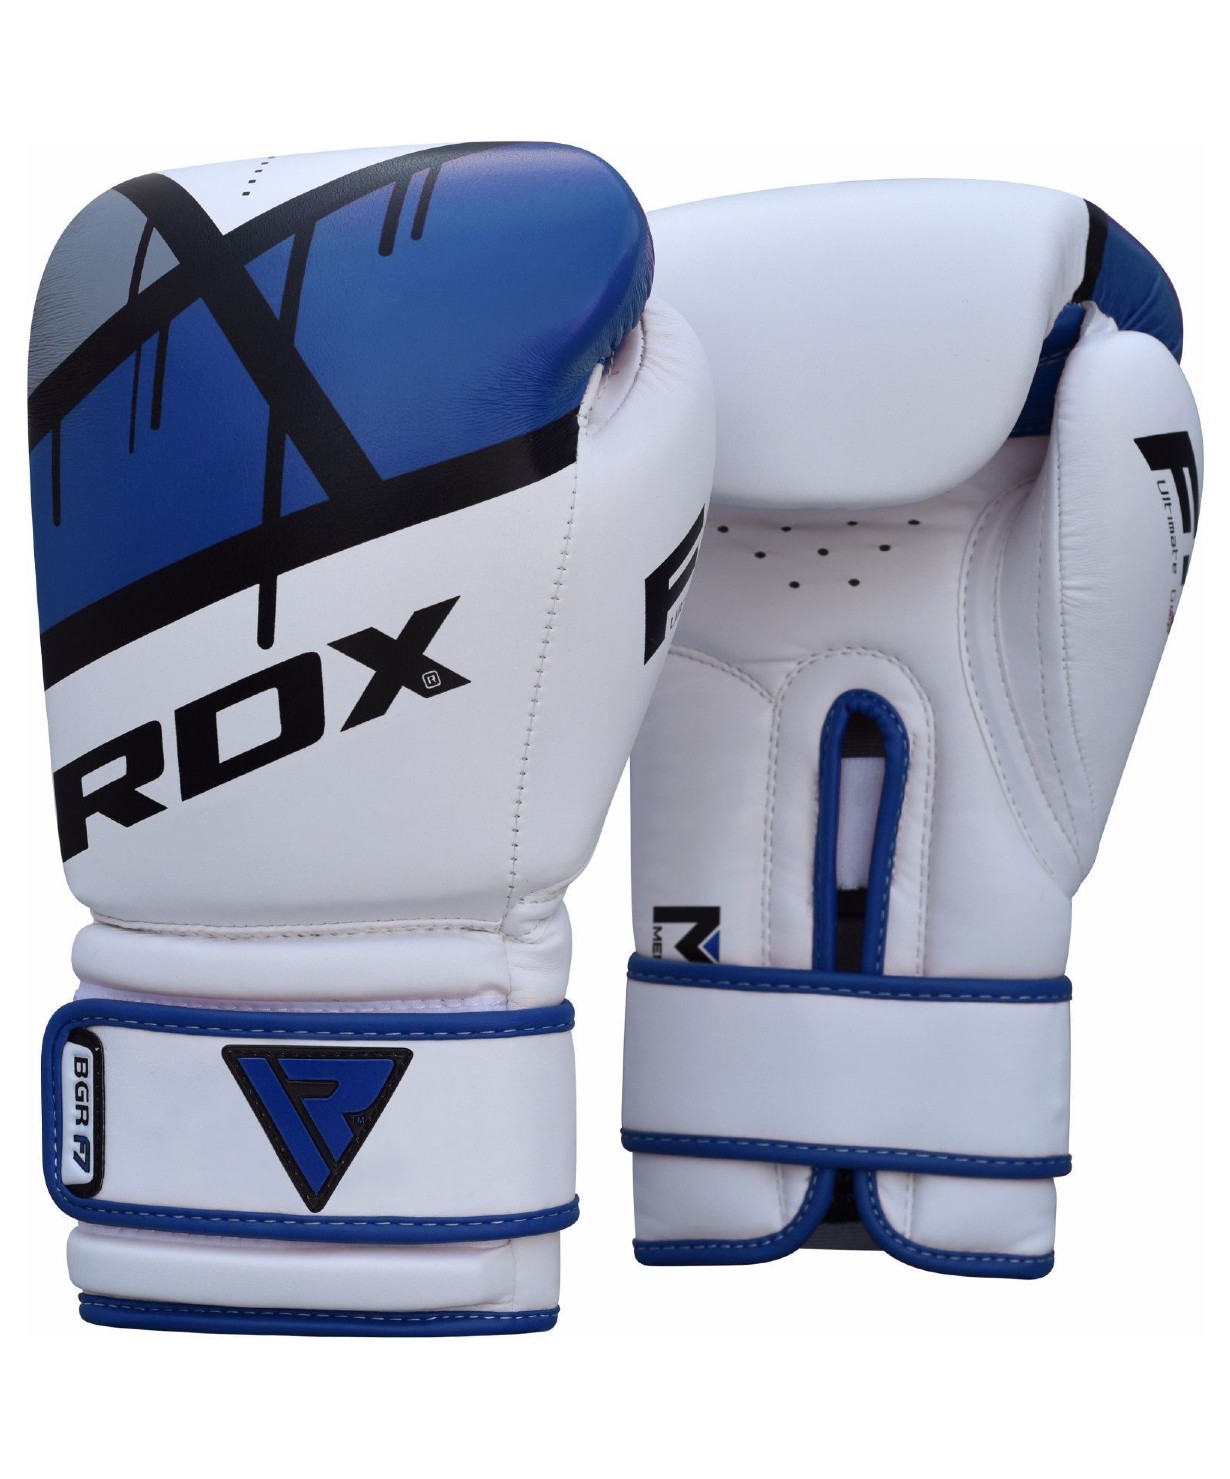 Боксерские перчатки RDX BGR-F7 BLUE BGR-F7U, синие, 8 унций